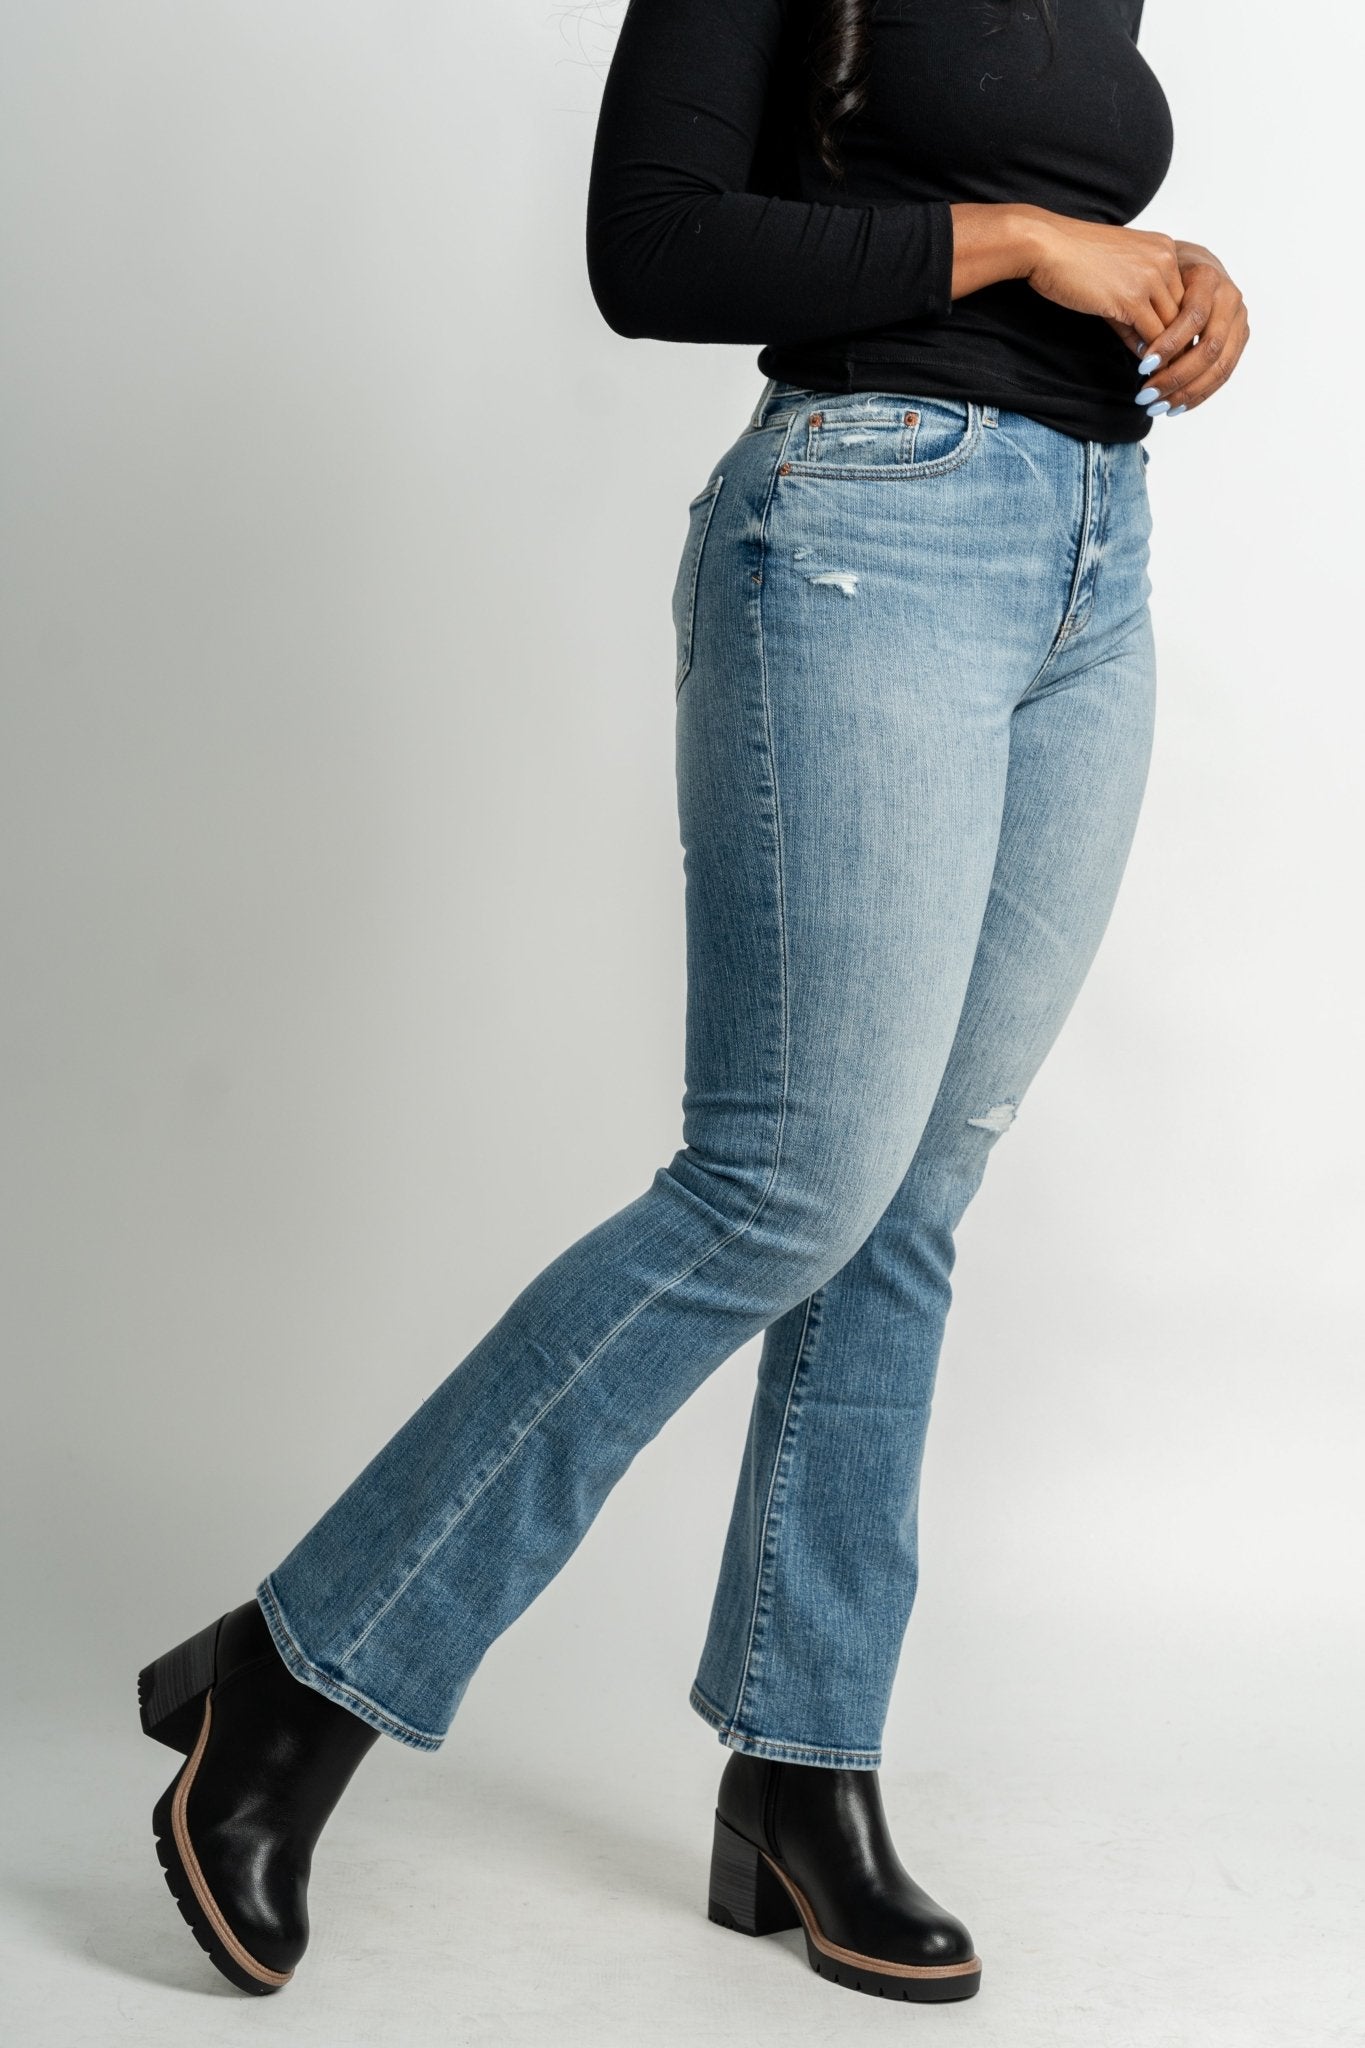 Daze denim high flare jeans slay | Lush Fashion Lounge: boutique women's jeans, fashion jeans for women, affordable fashion jeans, cute boutique jeans